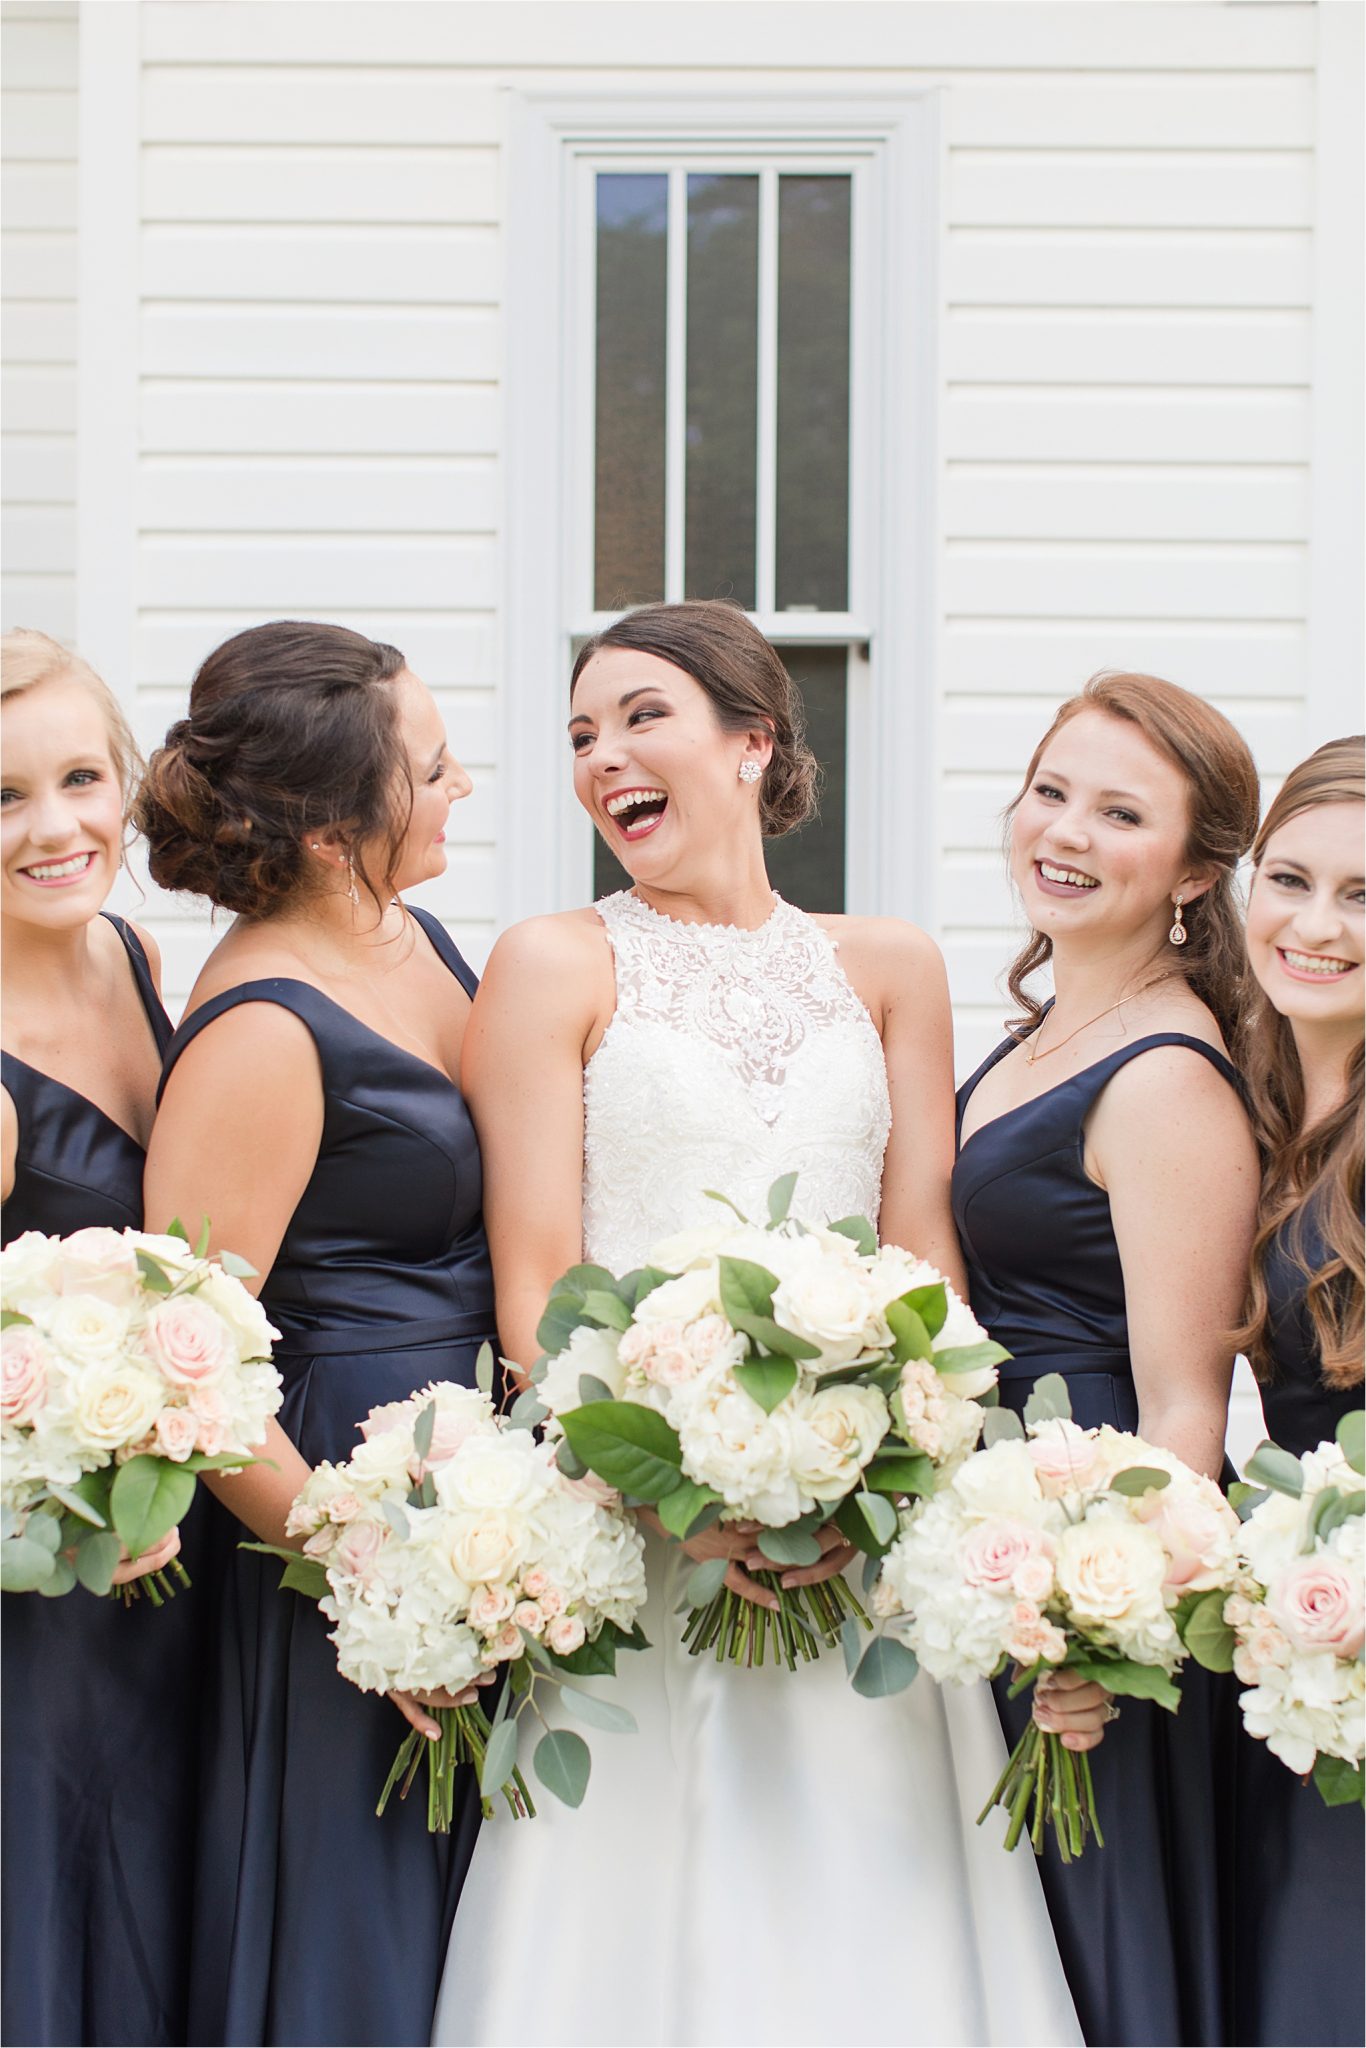 Sonnet House, Birmingham Alabama Wedding Photographer, Bride and bridesmaid, Wedding bouquets 